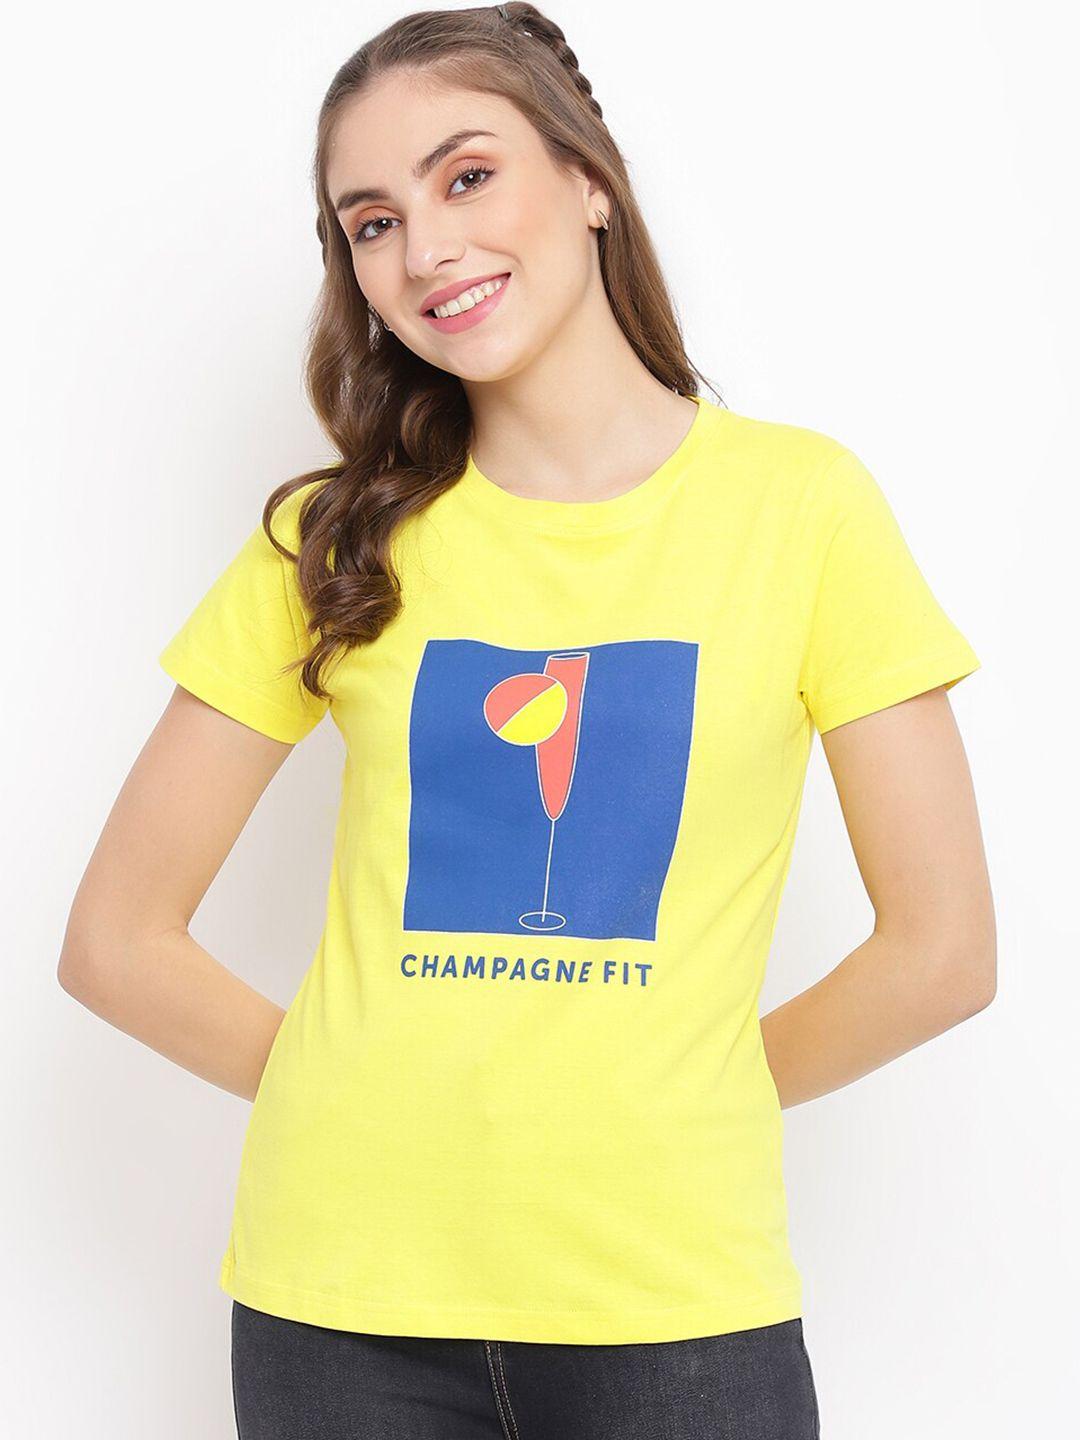 belliskey women yellow printed t-shirt